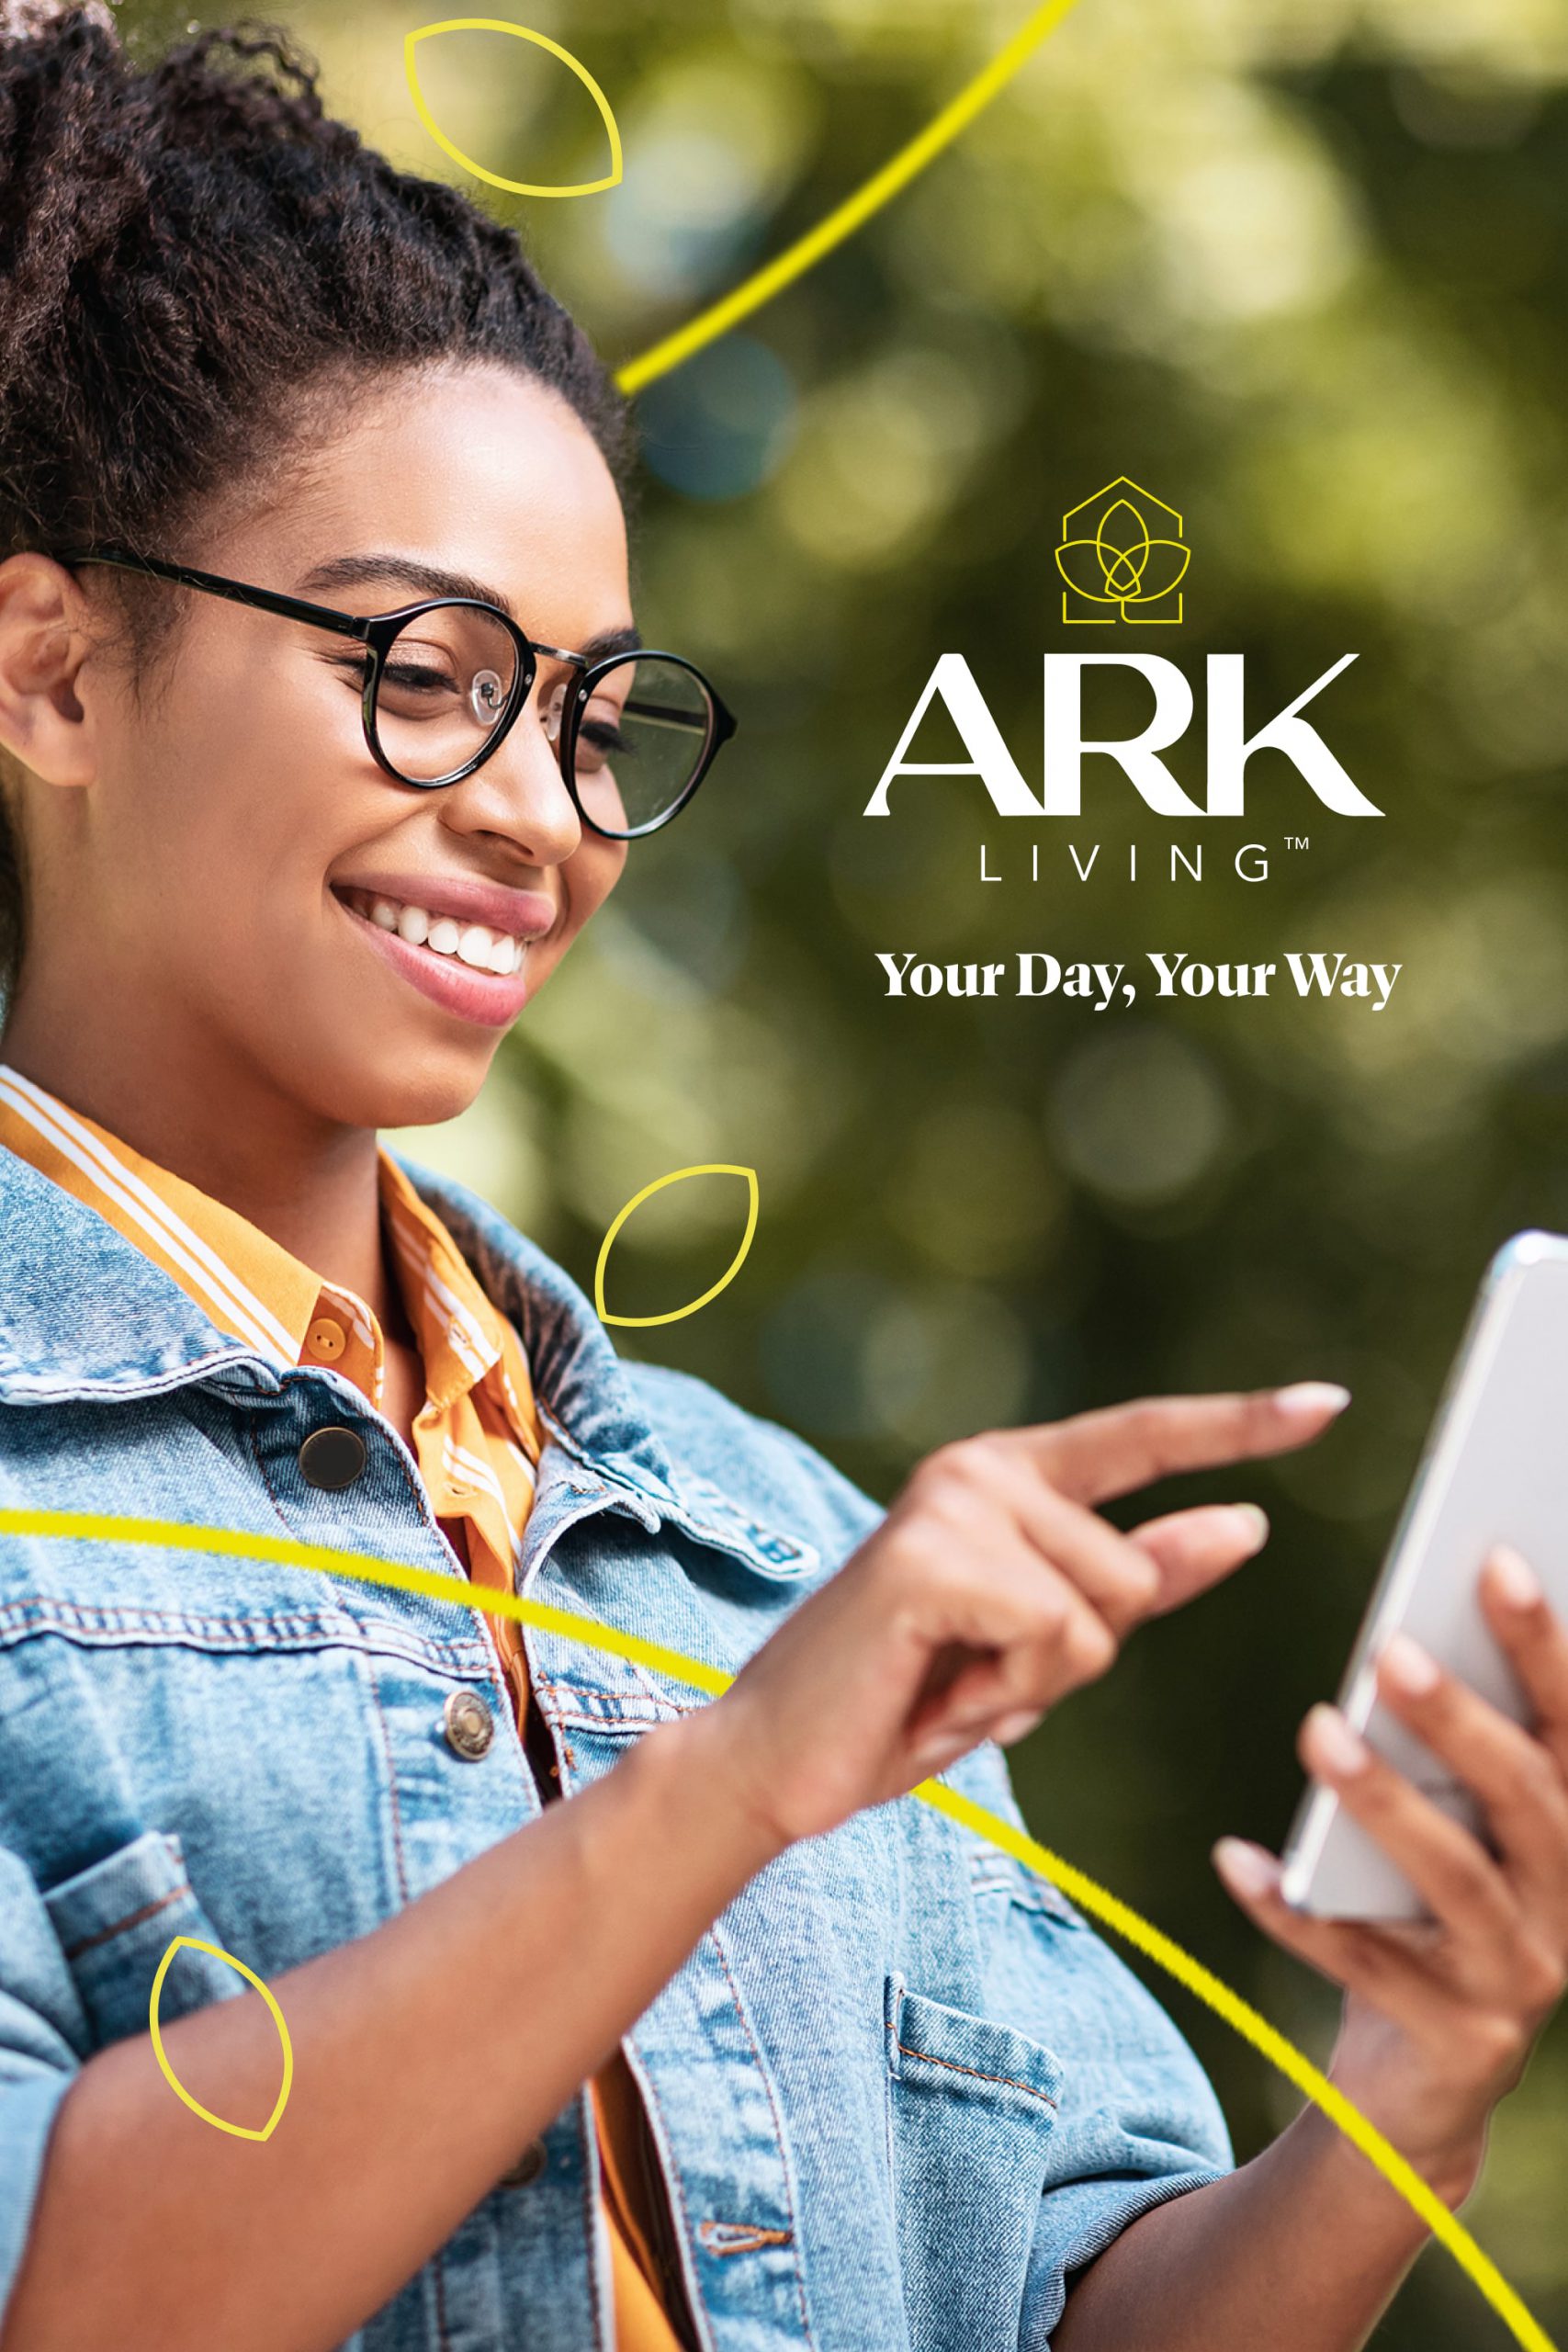 Lady on phone using ARK Living App